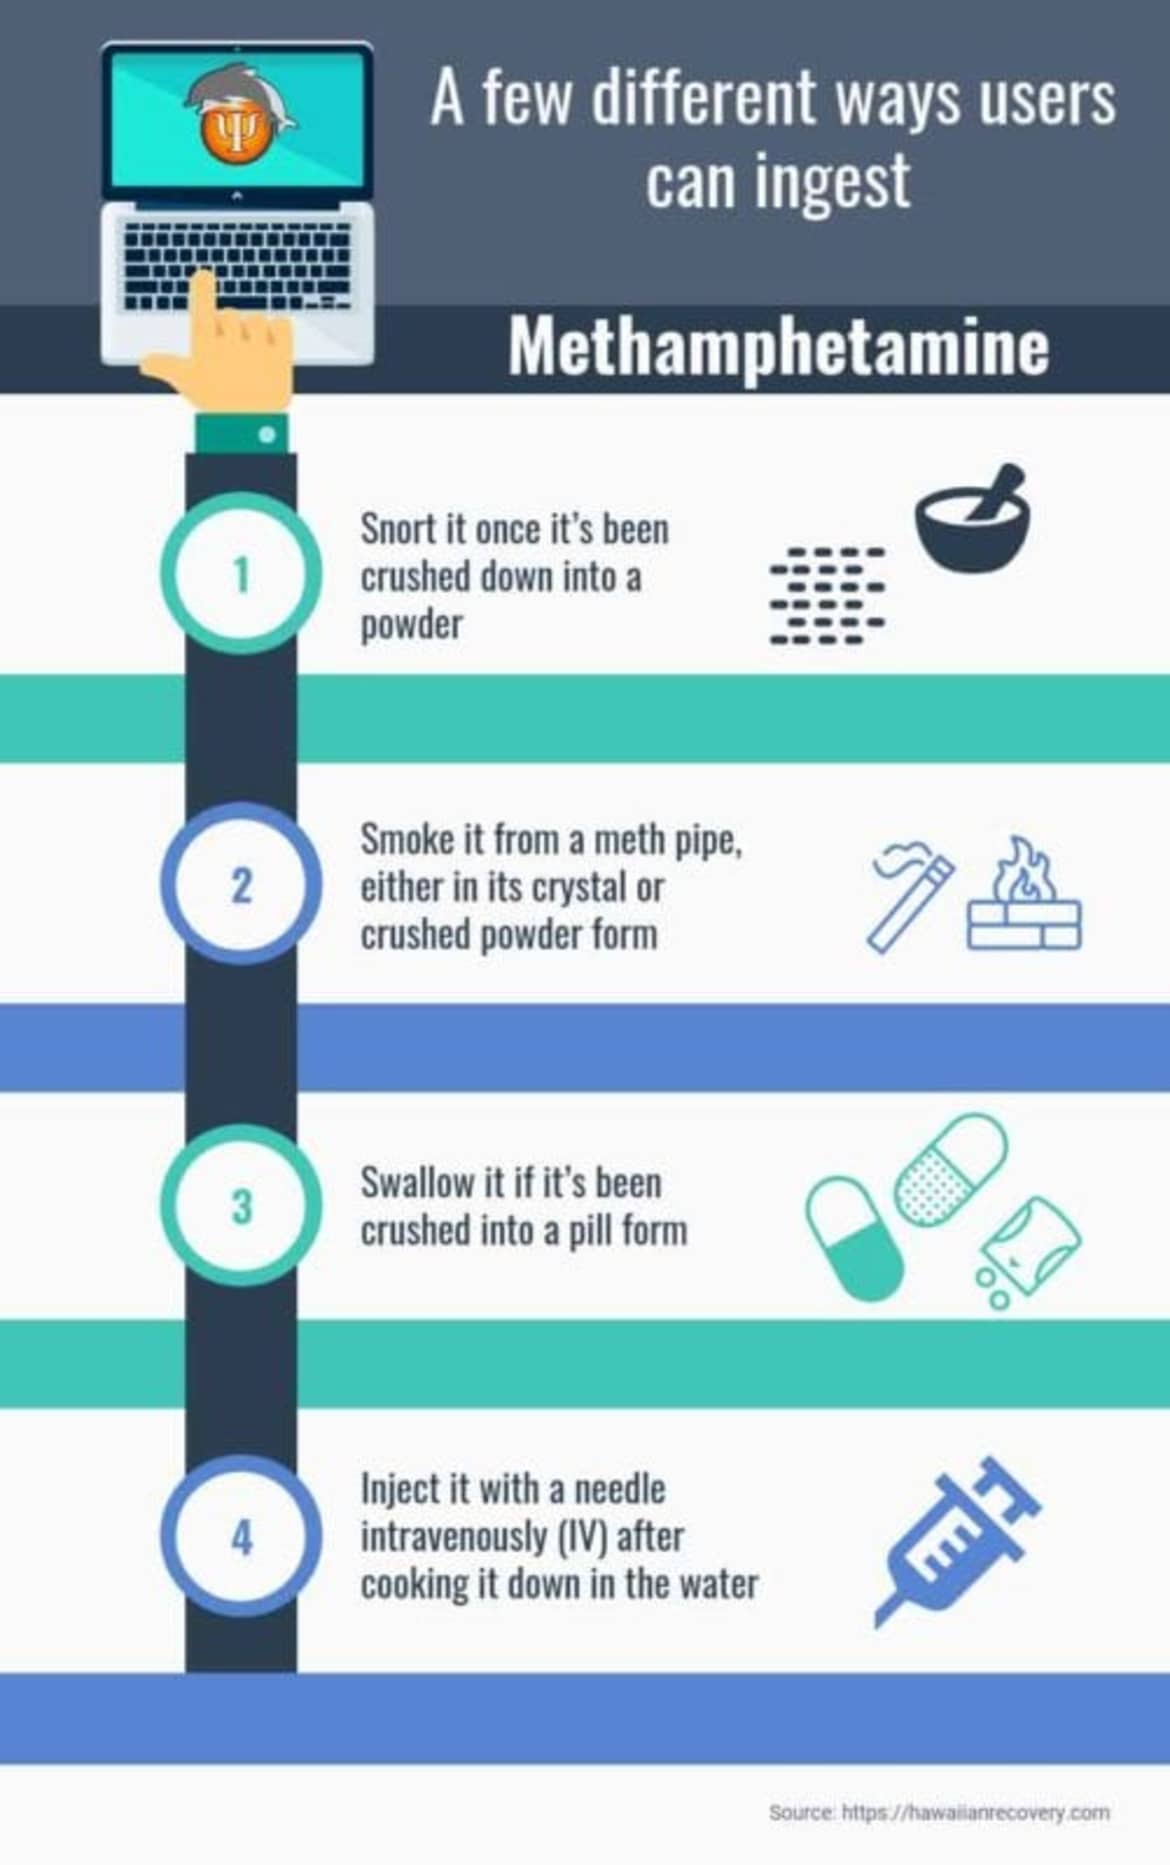 Different Ways Can Ingest Methamphetamine